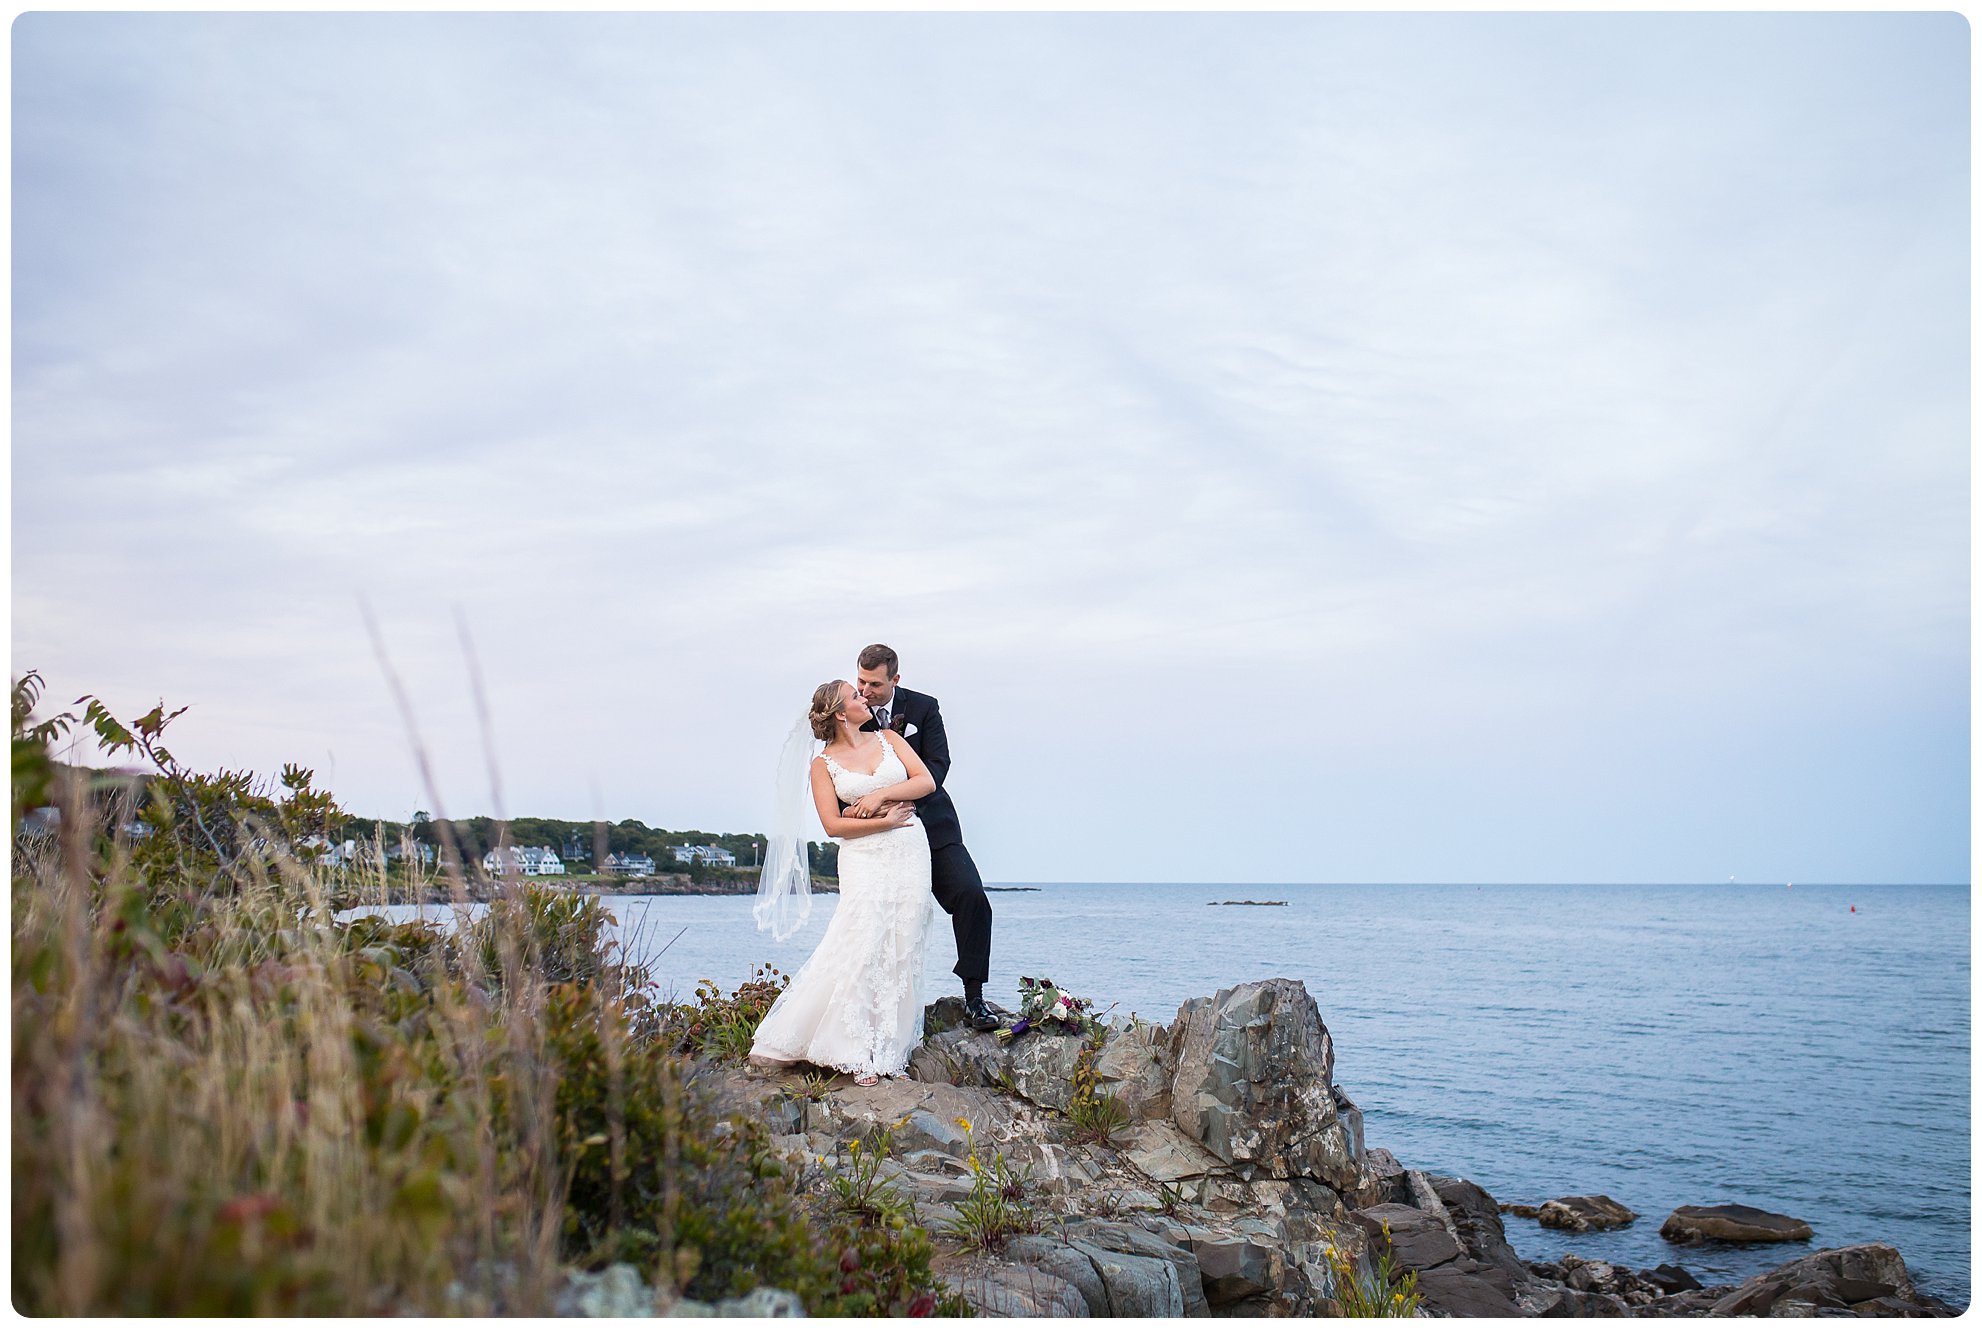 Melanie Grady Photography - Maine wedding photographer, york maine, ogunquit maine, destination wedding -118_BLOG.jpg